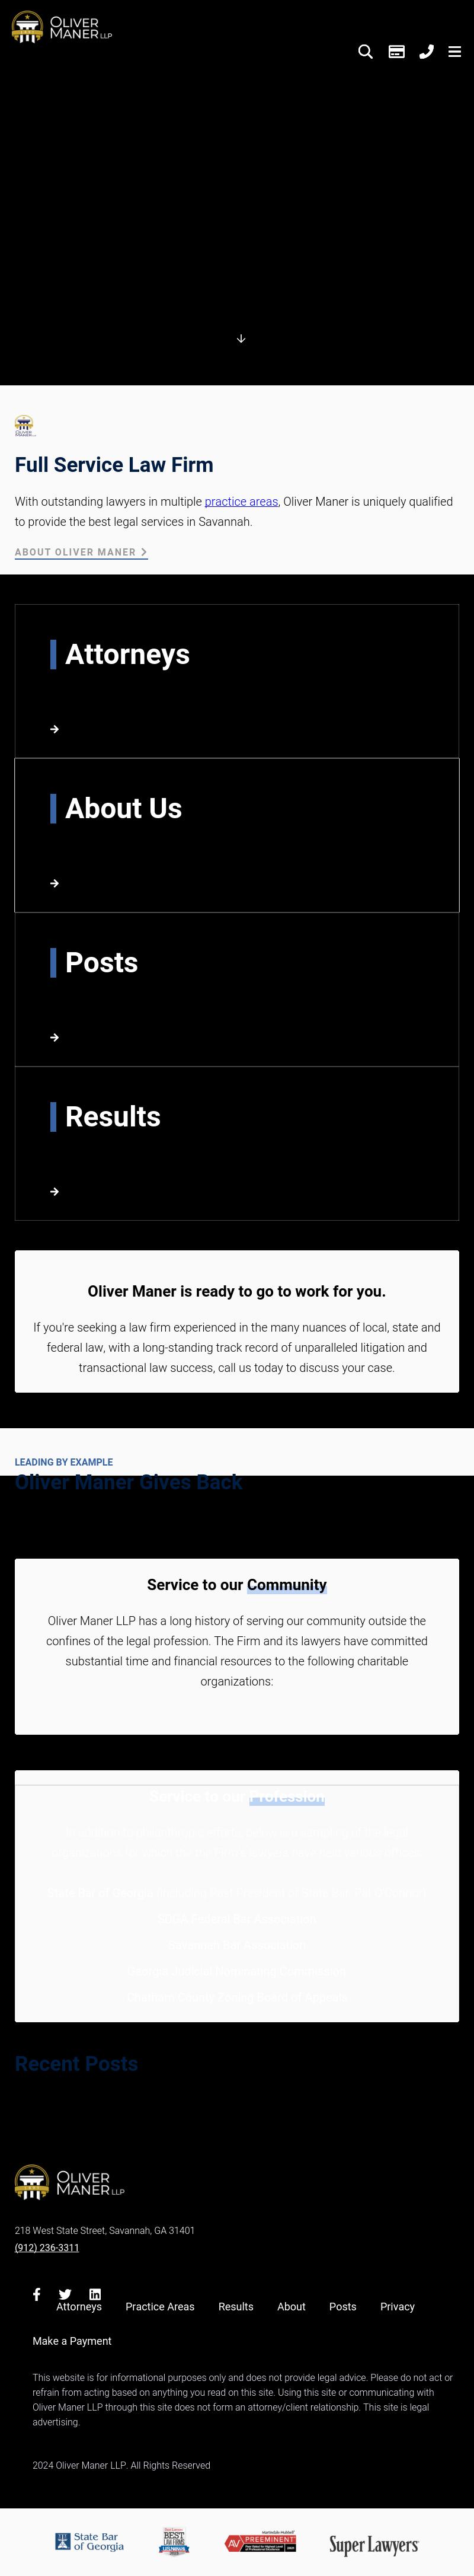 Oliver Maner LLP - Savannah GA Lawyers